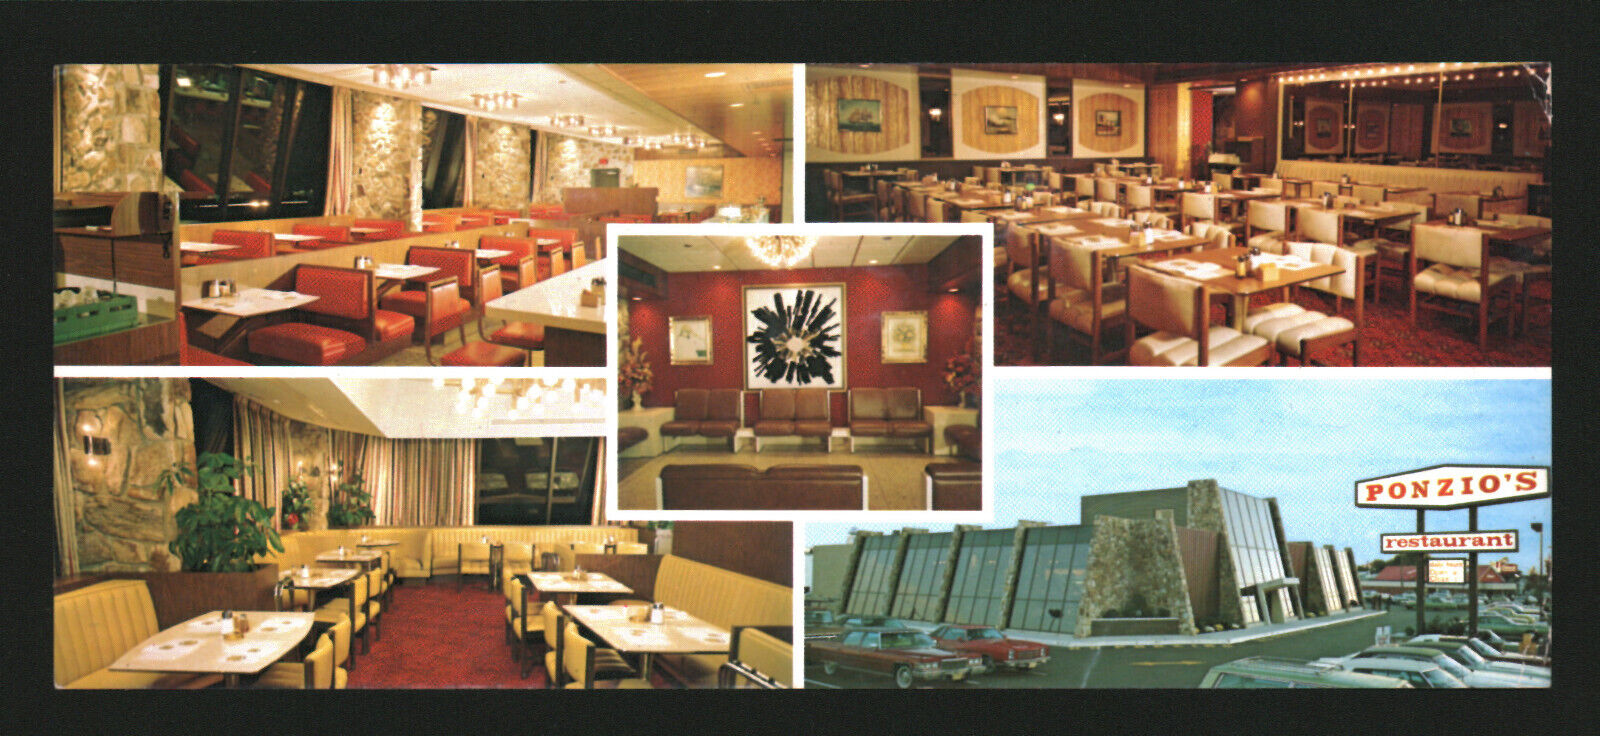 Ponzio\'s Restaurant Brooklawn NJ  New Jersey Postcard Late 1970s Cars Disco Era